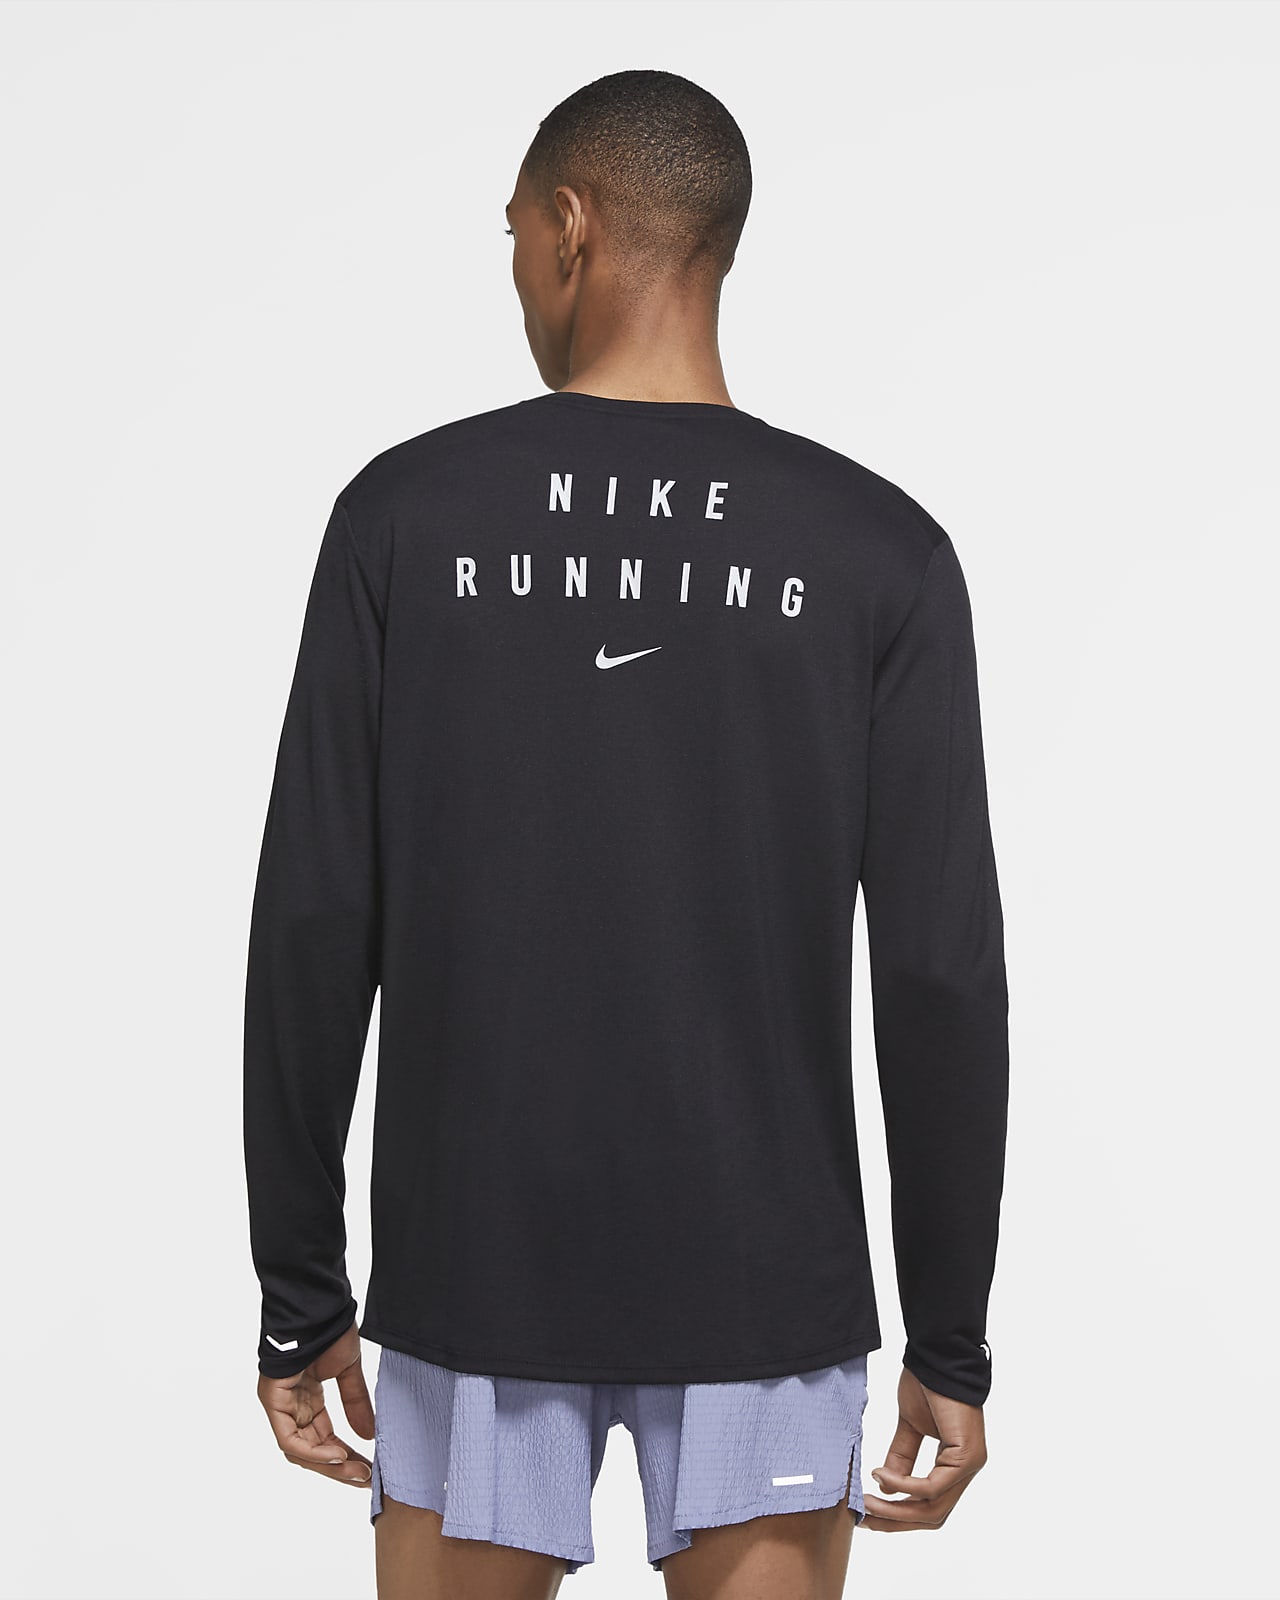 nike men's running shirt long sleeve